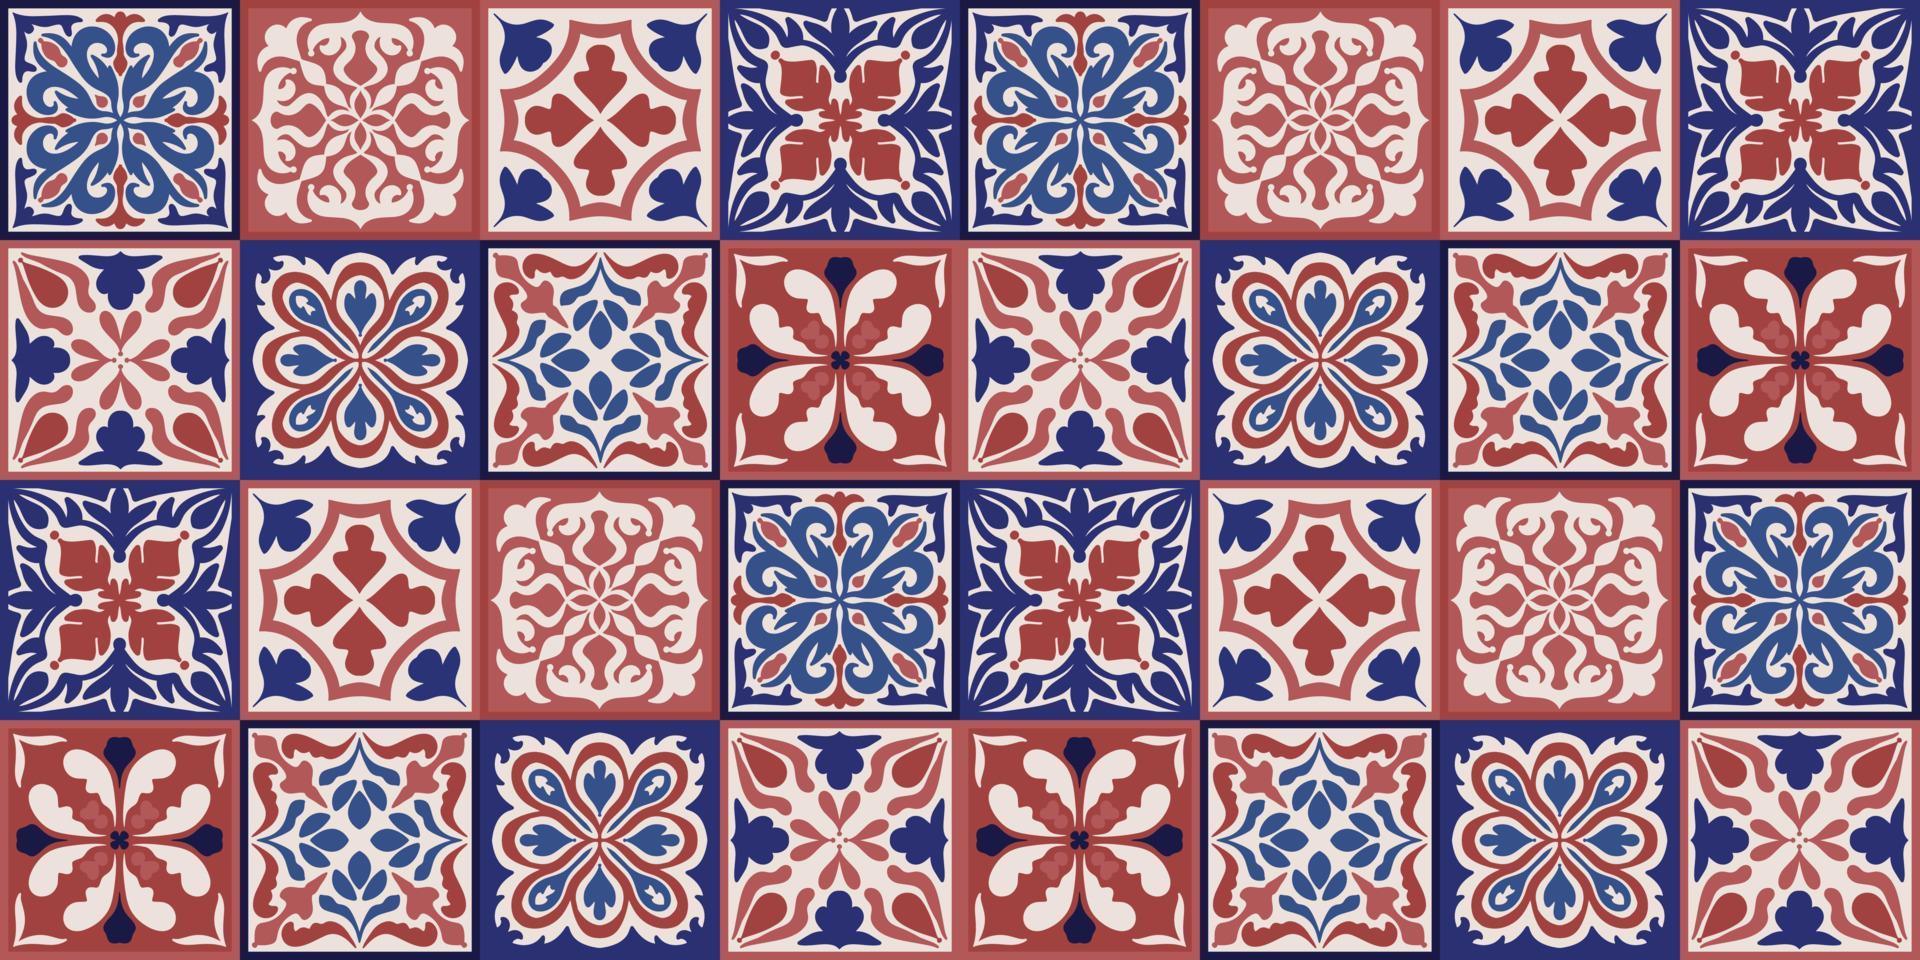 nahtlos marokkanisch Mosaik Fliese Muster mit bunt Patchwork. Jahrgang Portugal Azulejo, Mexikaner Talavera, Italienisch Majolika Ornament, Arabeske Motiv oder Spanisch Keramik Mosaik vektor